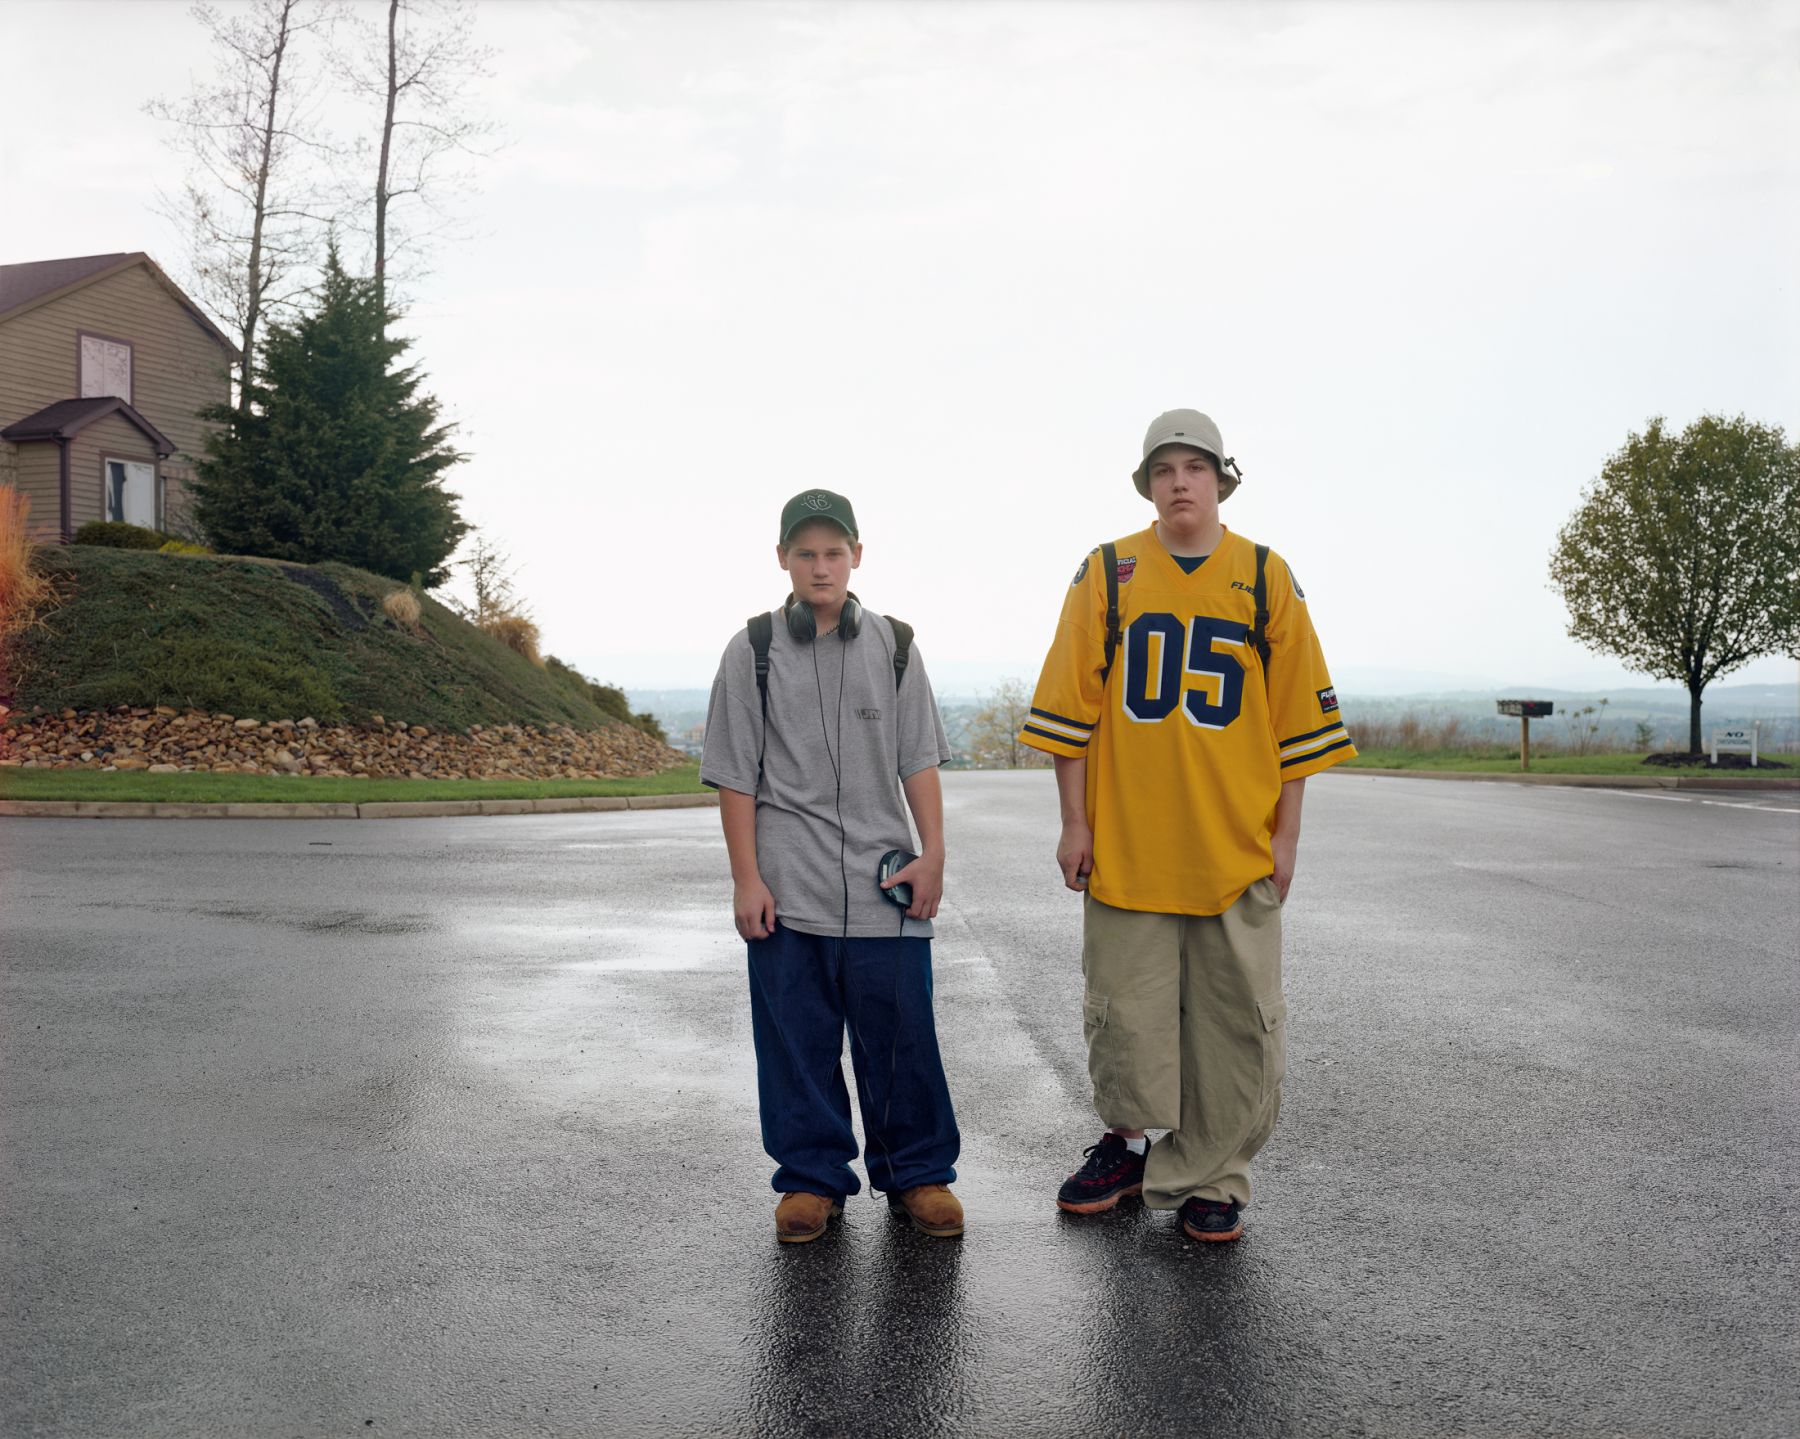 5_Boys Walking Home After School, Harrisonburg, Virginia, May 1998.jpeg